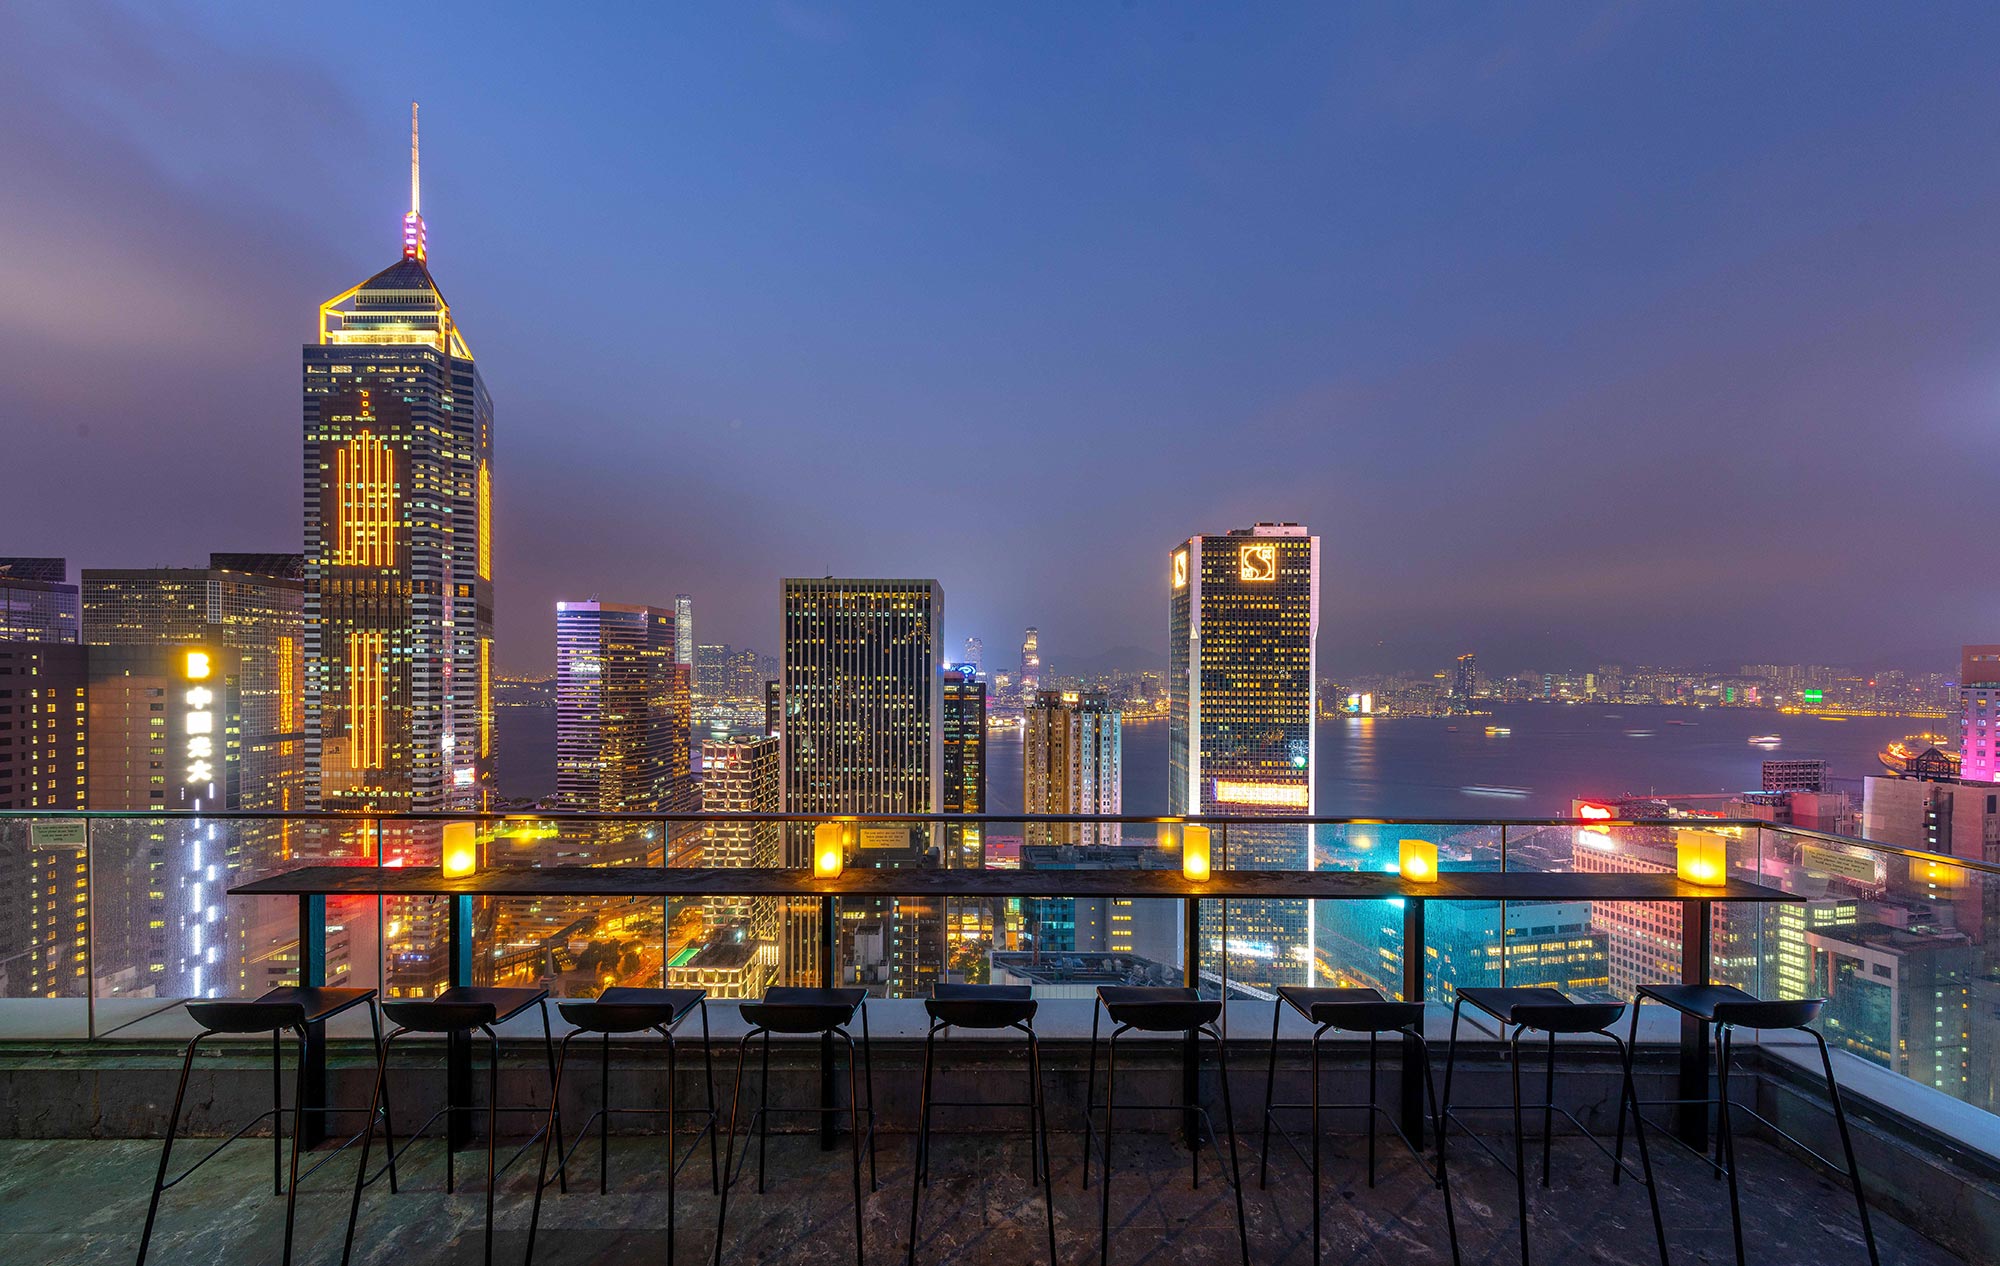 Nighttime skyline view of Hong Kong from Wooloomooloo rooftop bar